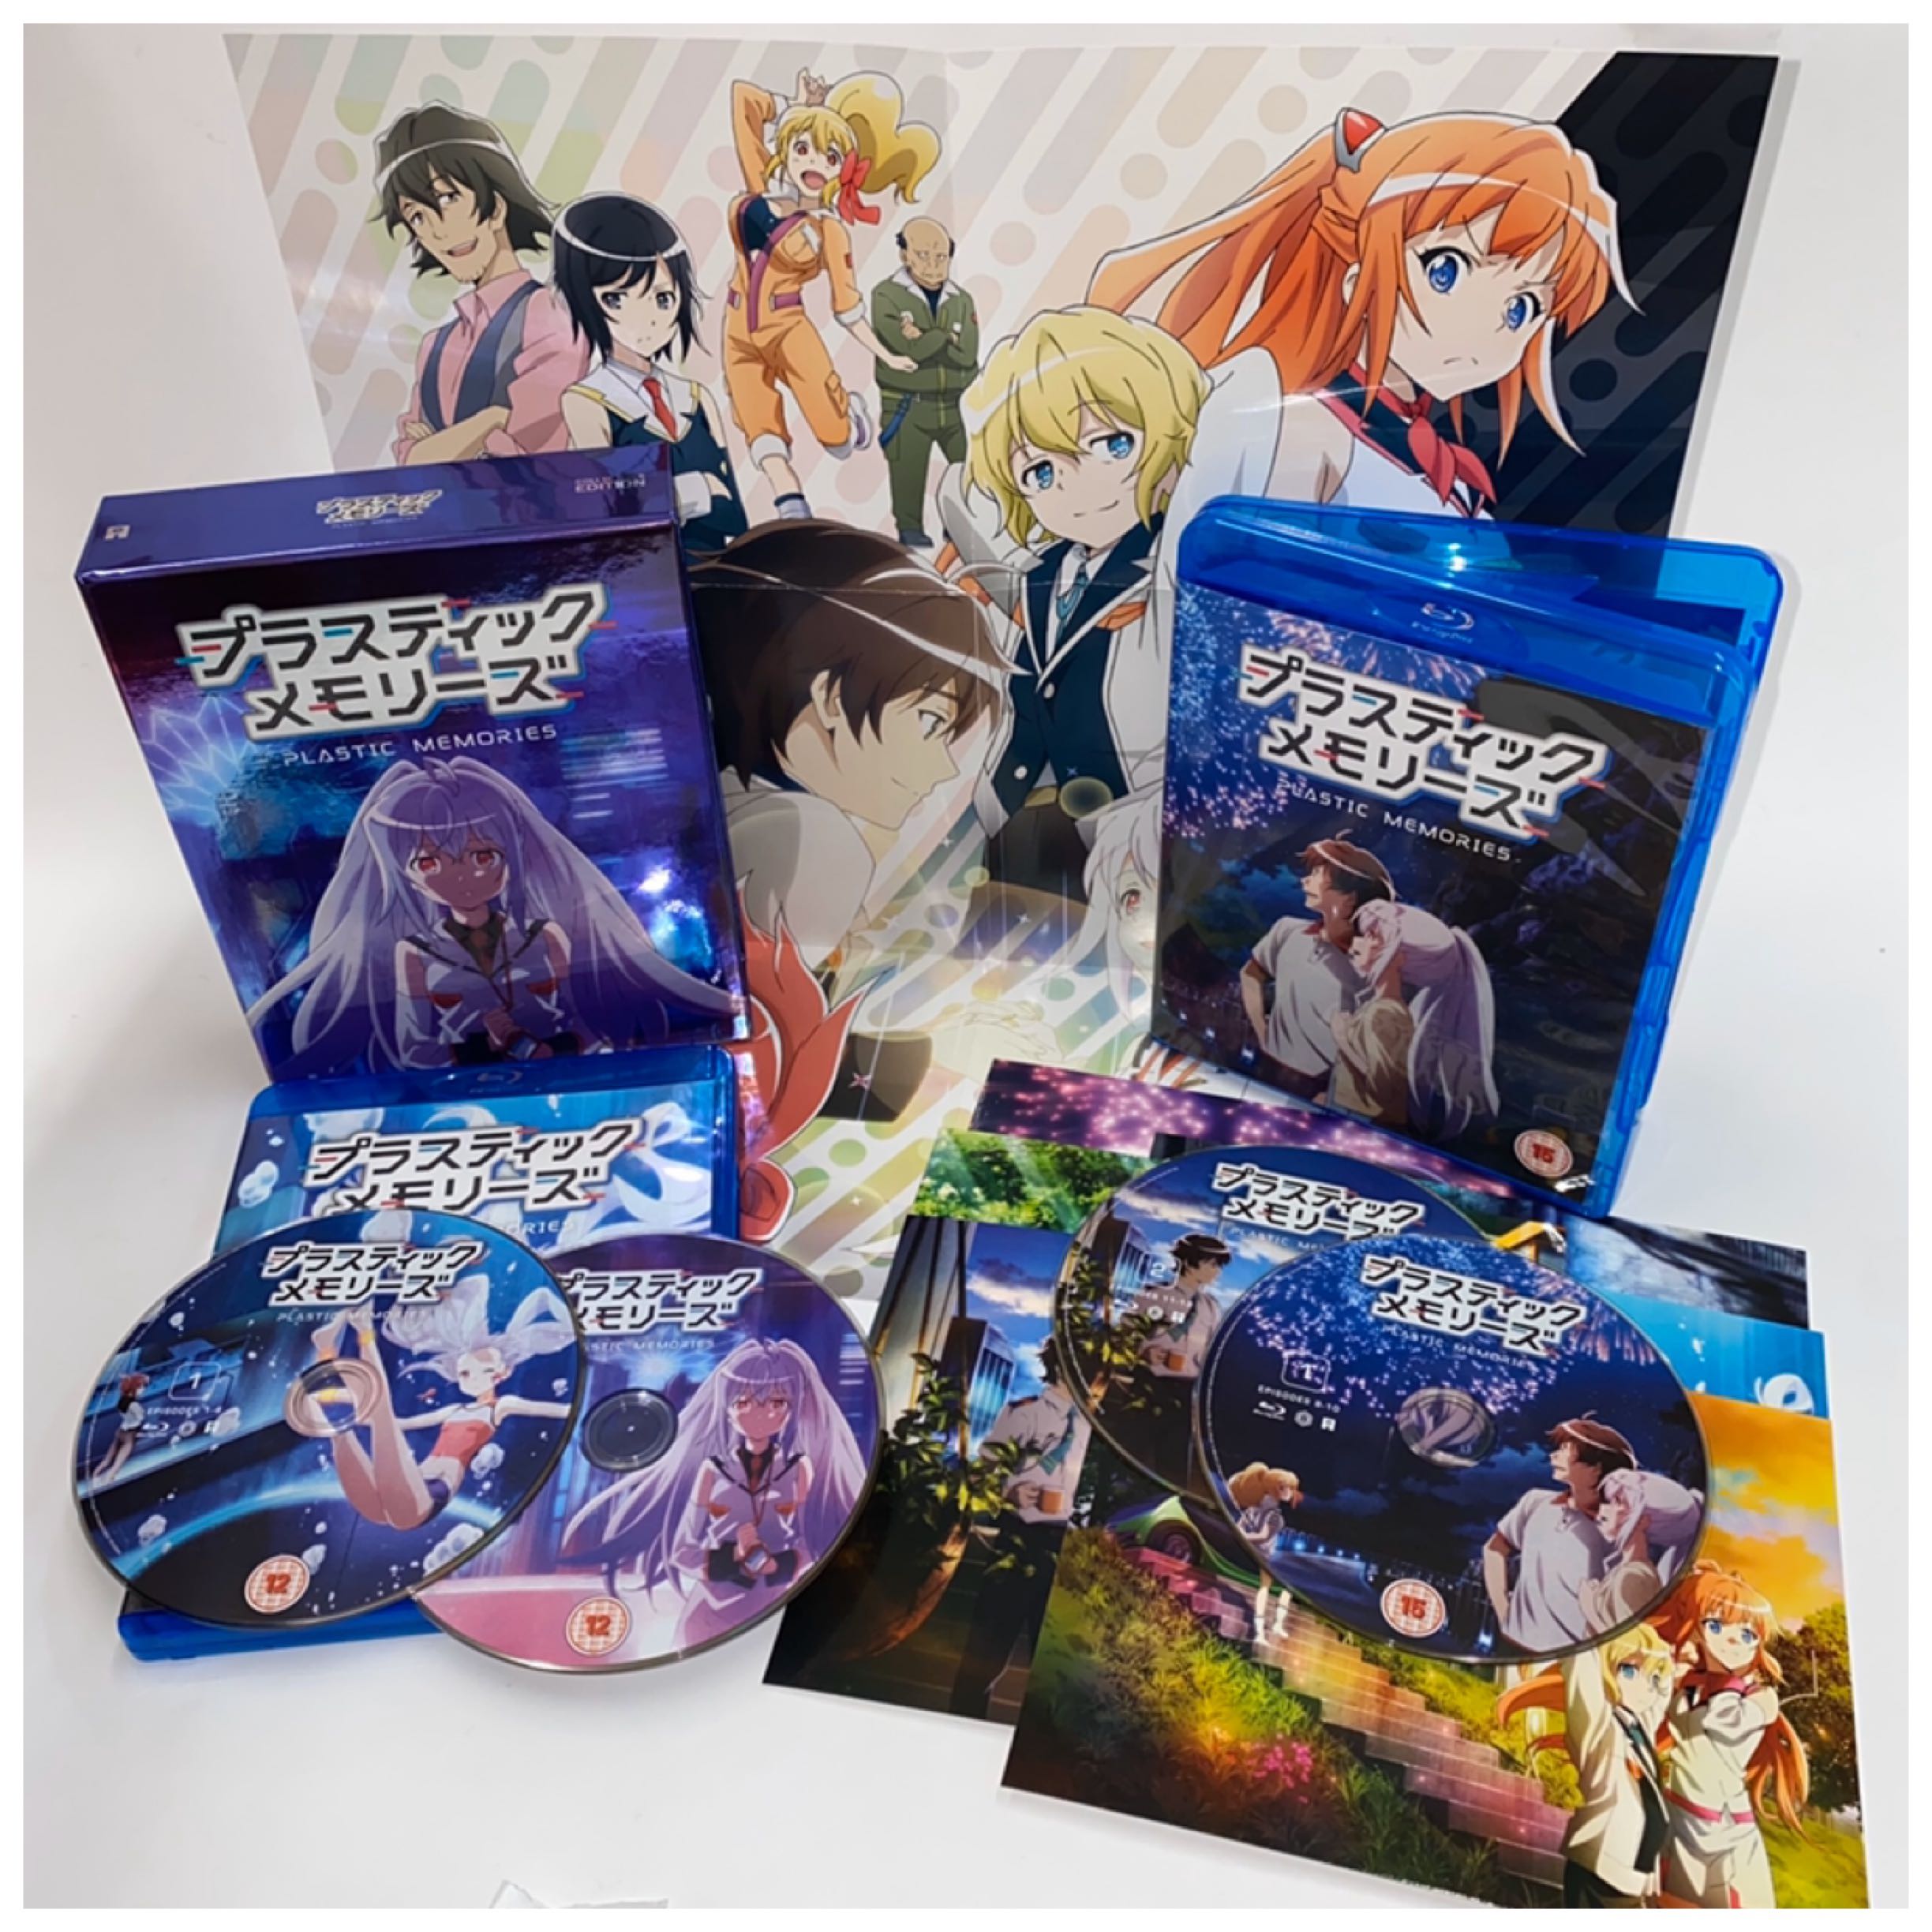 Plastic Memories  Memories anime, Anime romance, Anime printables